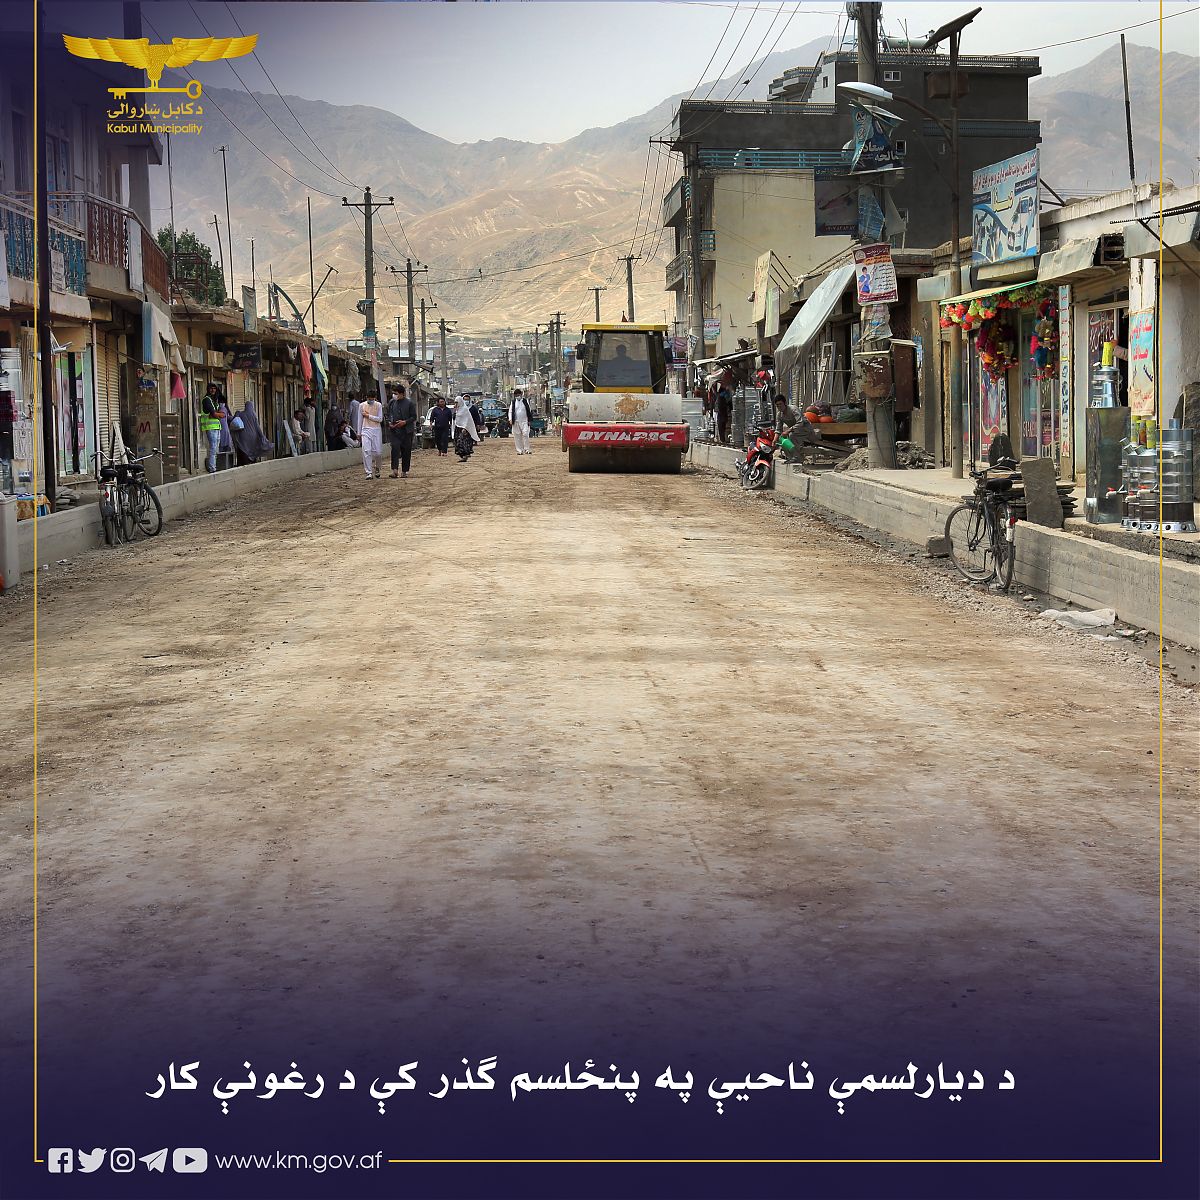 Kabul Municipality شاروالی کابل کار بهسازی در گذر پانزدهم ناحیه سیزدهم